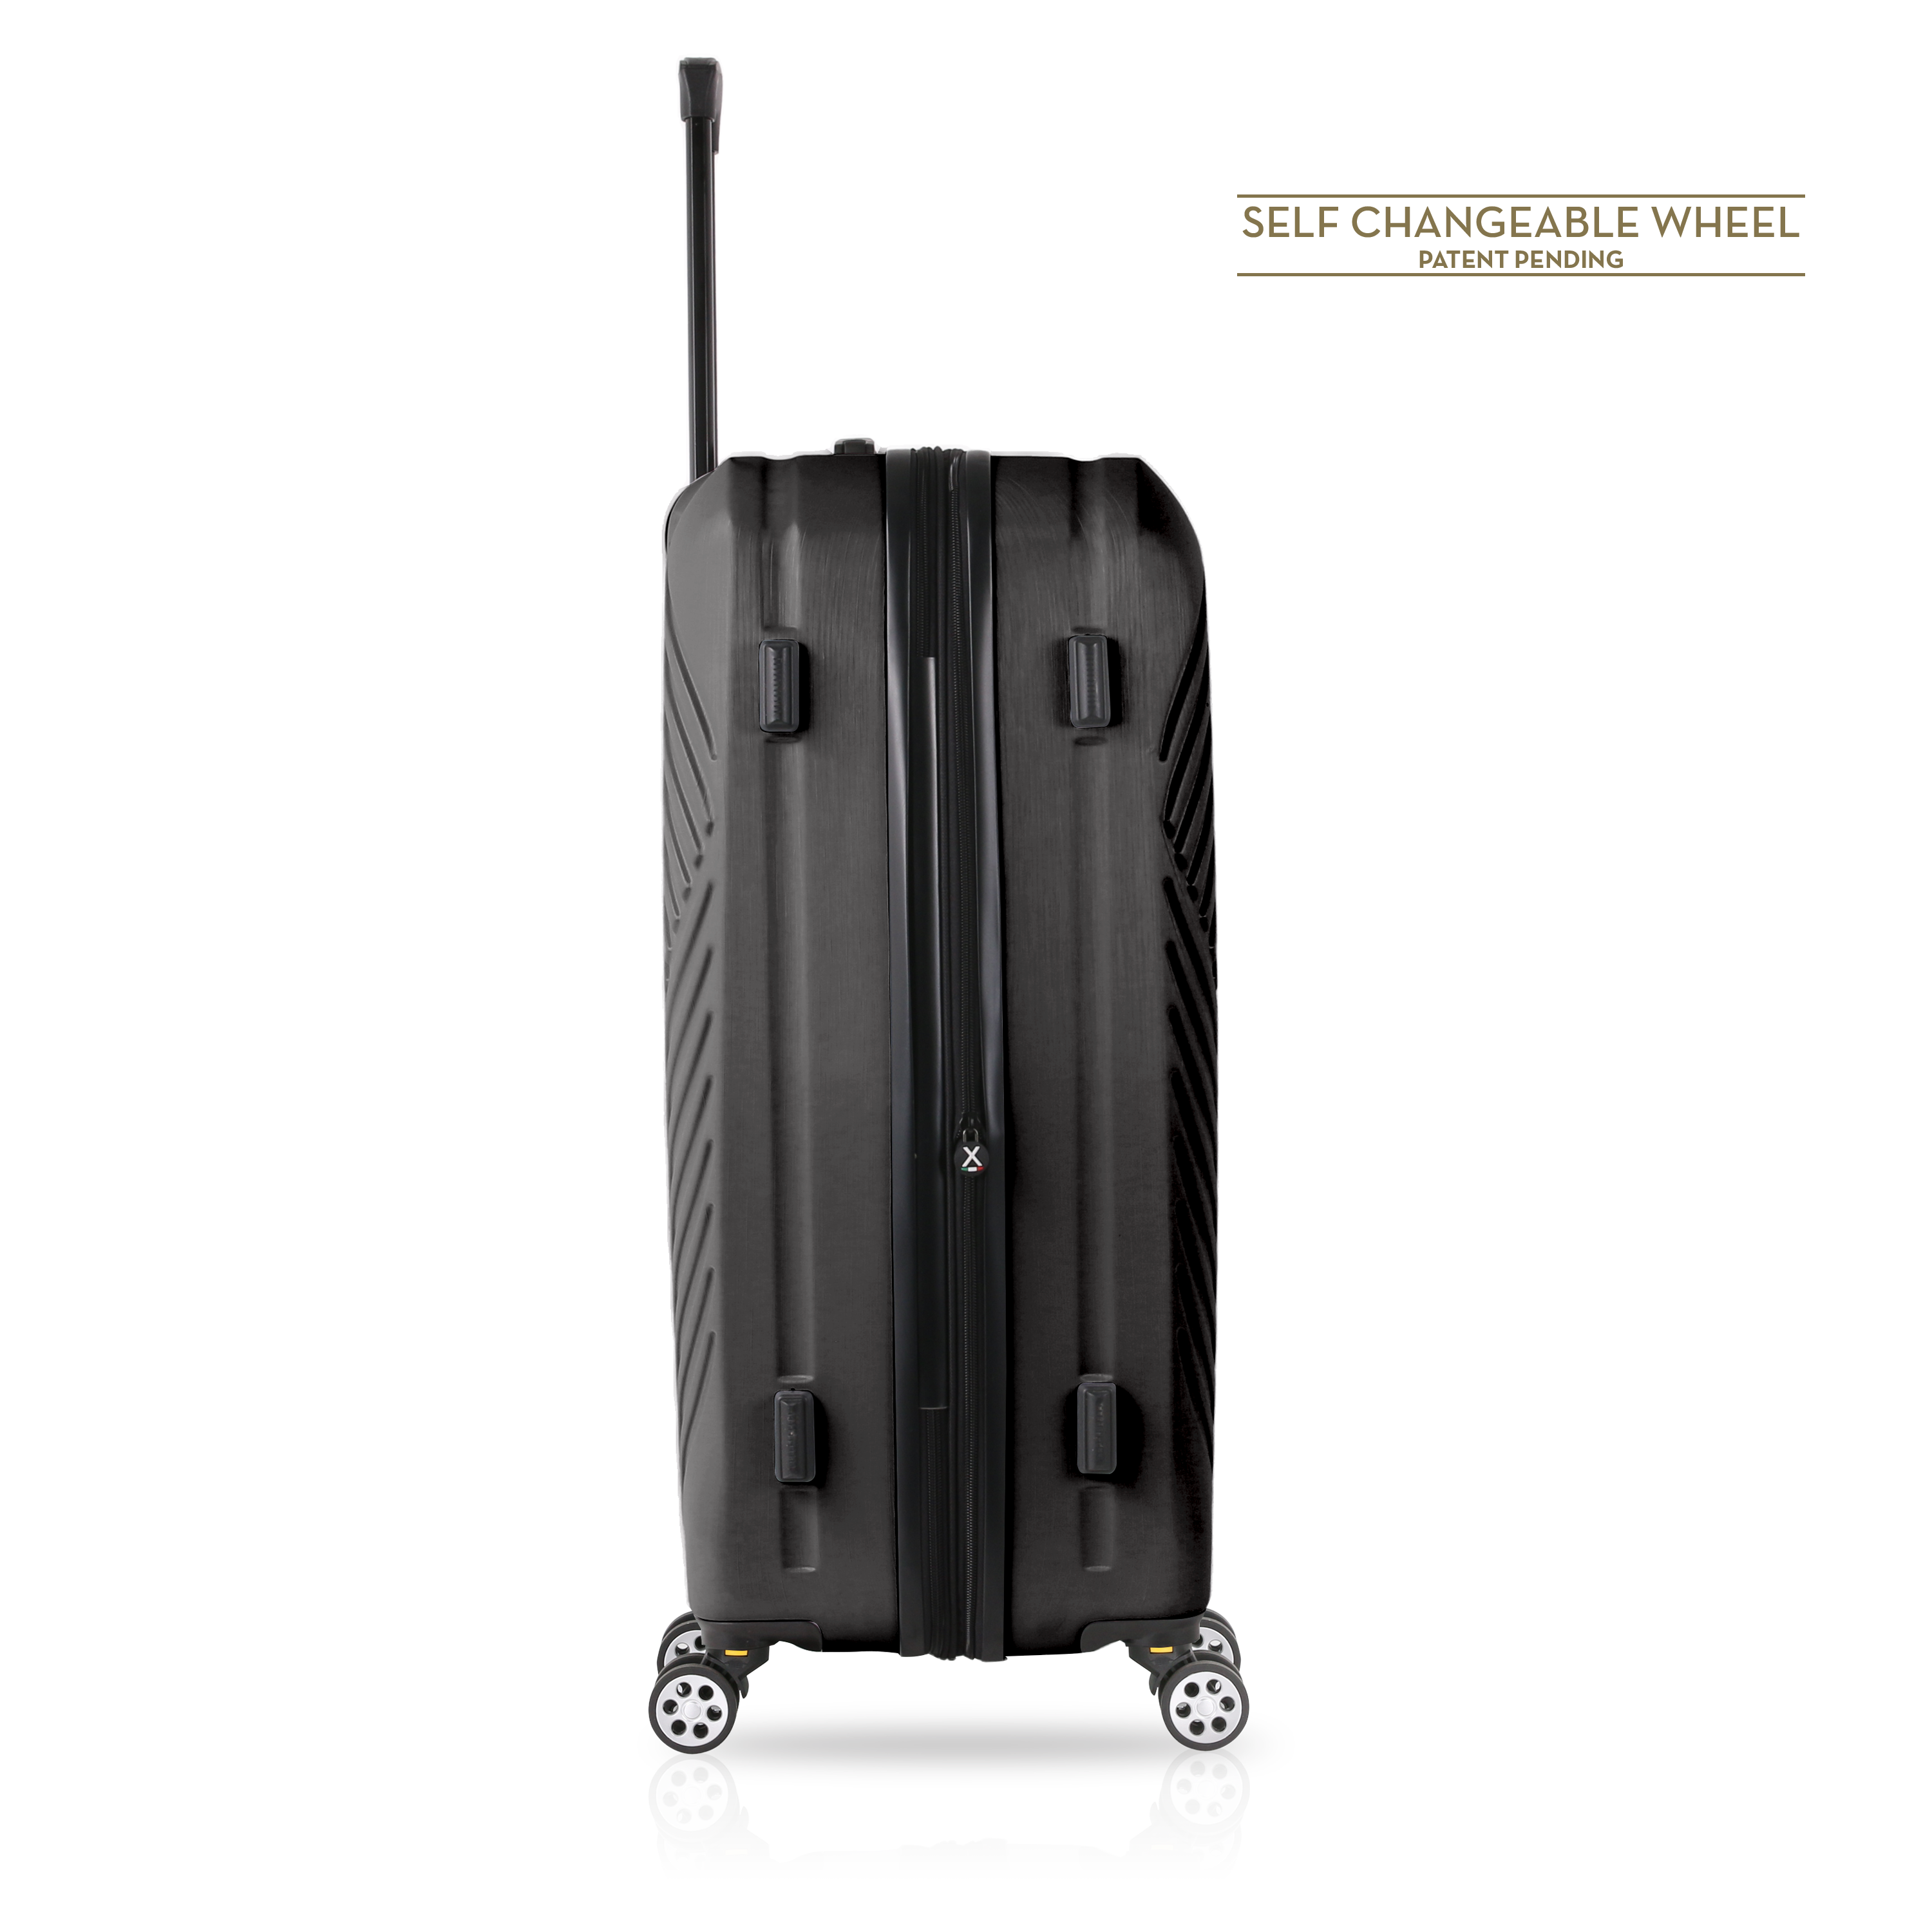 TUCCI Italy MOZZAFIATO 32" Travel Luggage Suitcase